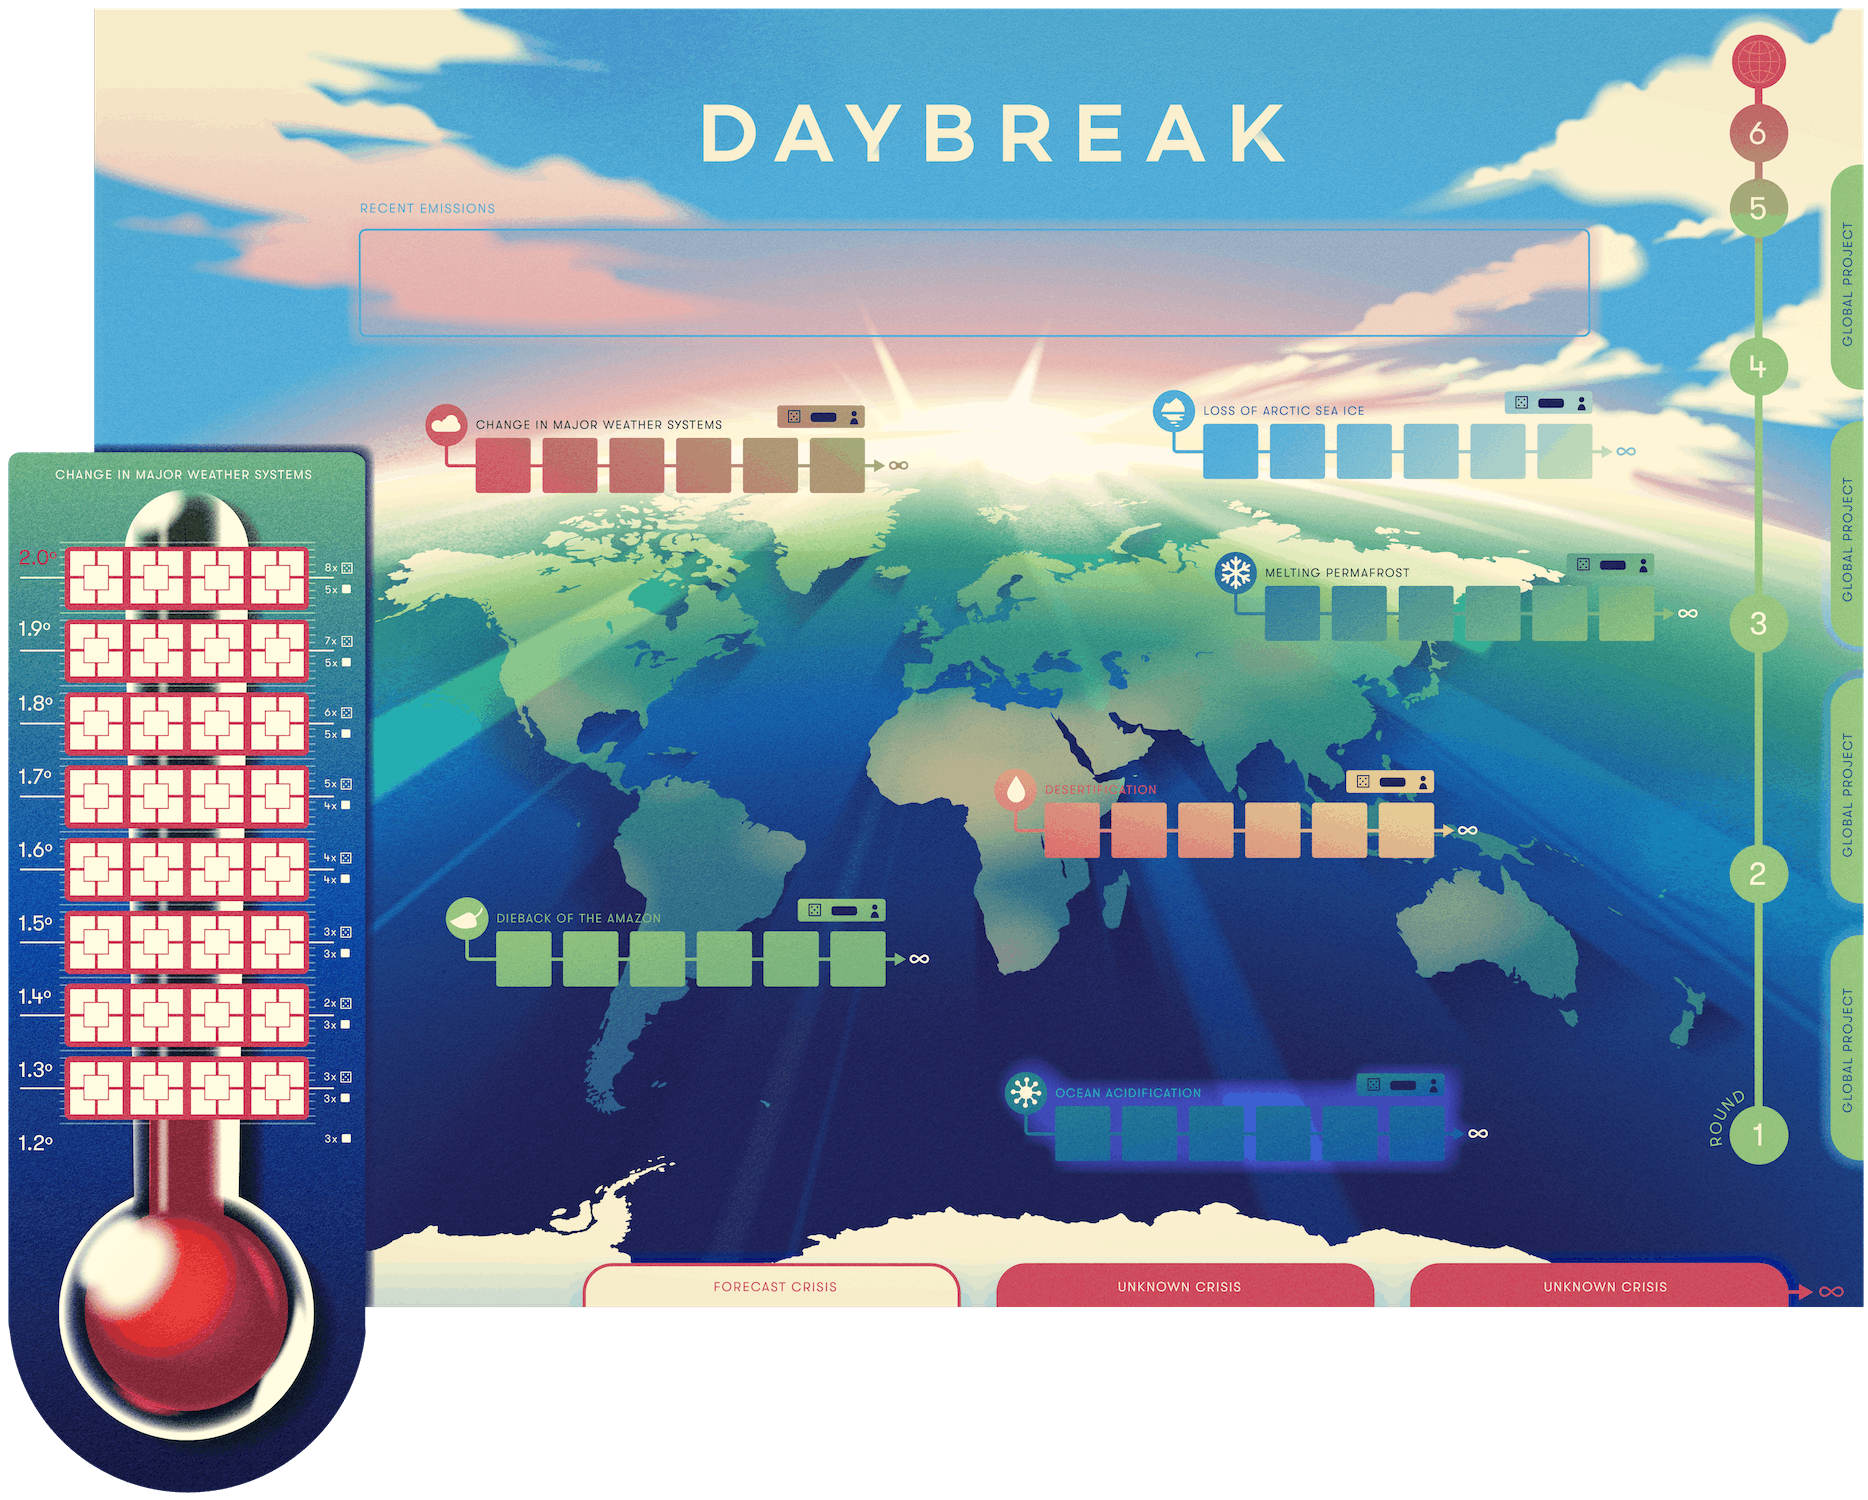 Daybreak gameboard illo by Mads Berg